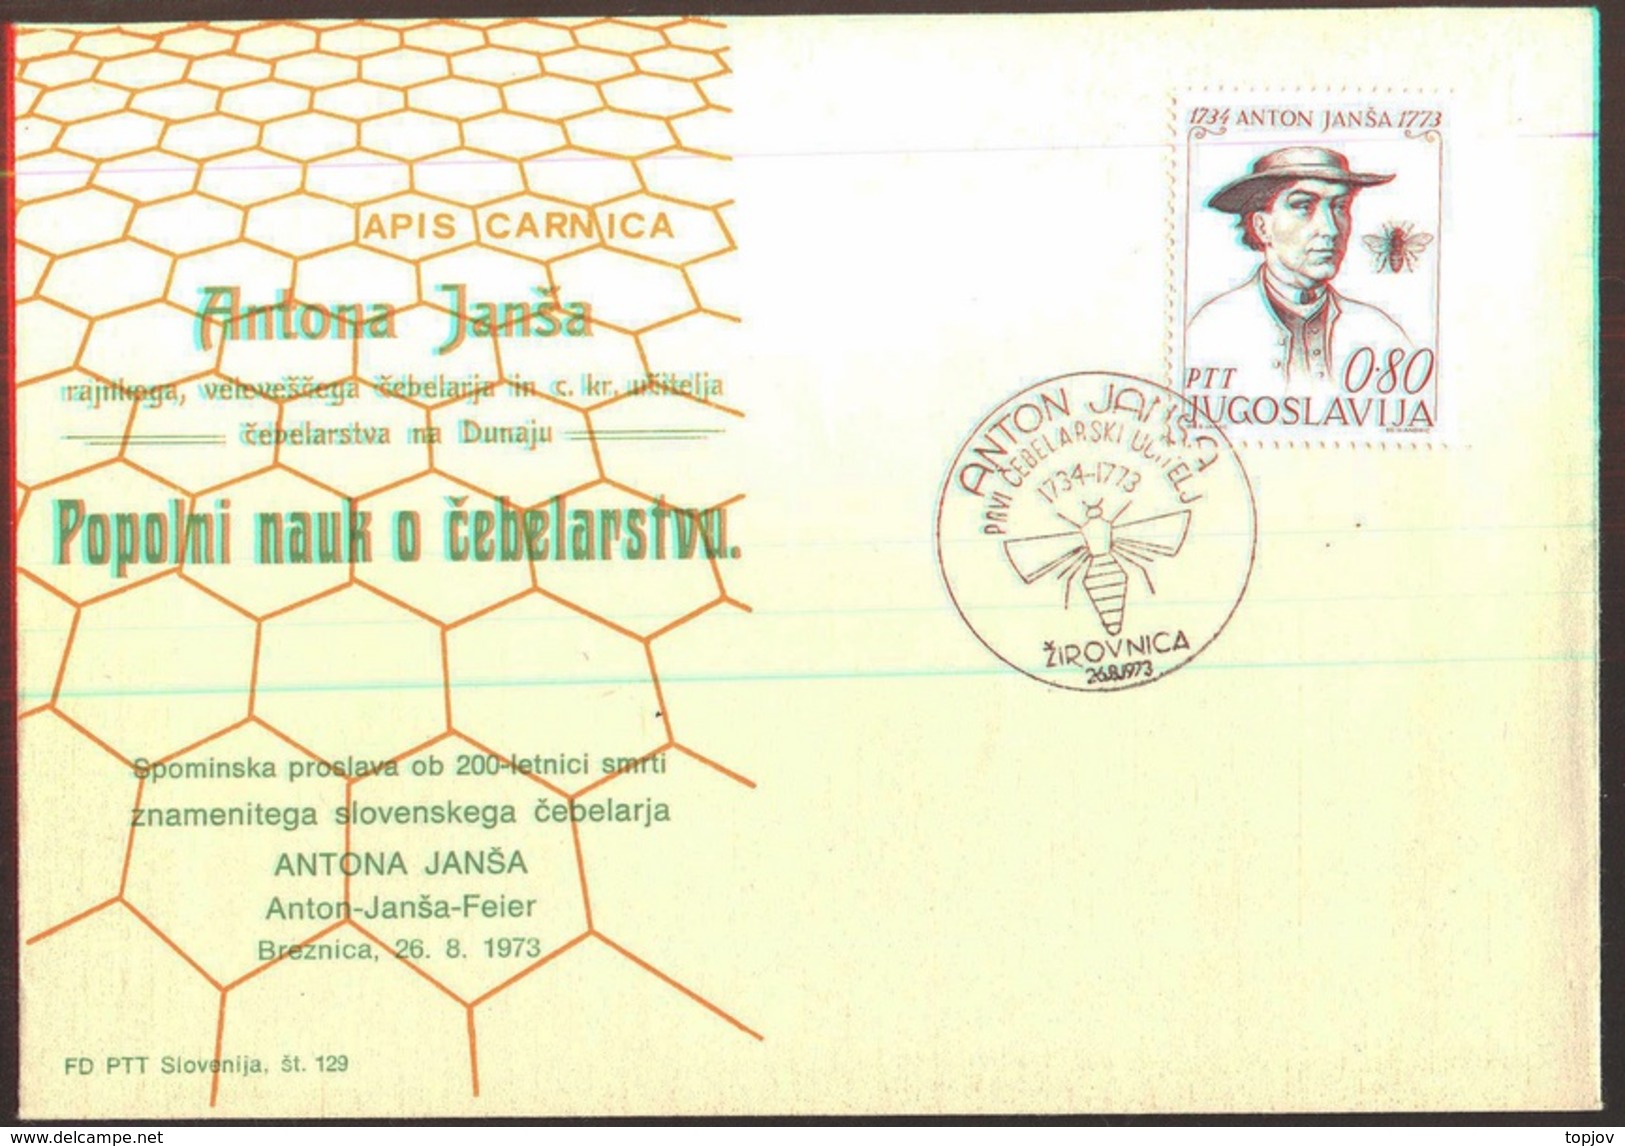 YUGOSLAVIA - JUGOSLAVIA - JANSA - Bees - Honey - ZIROVNICA - FDC - 1973 - FDC